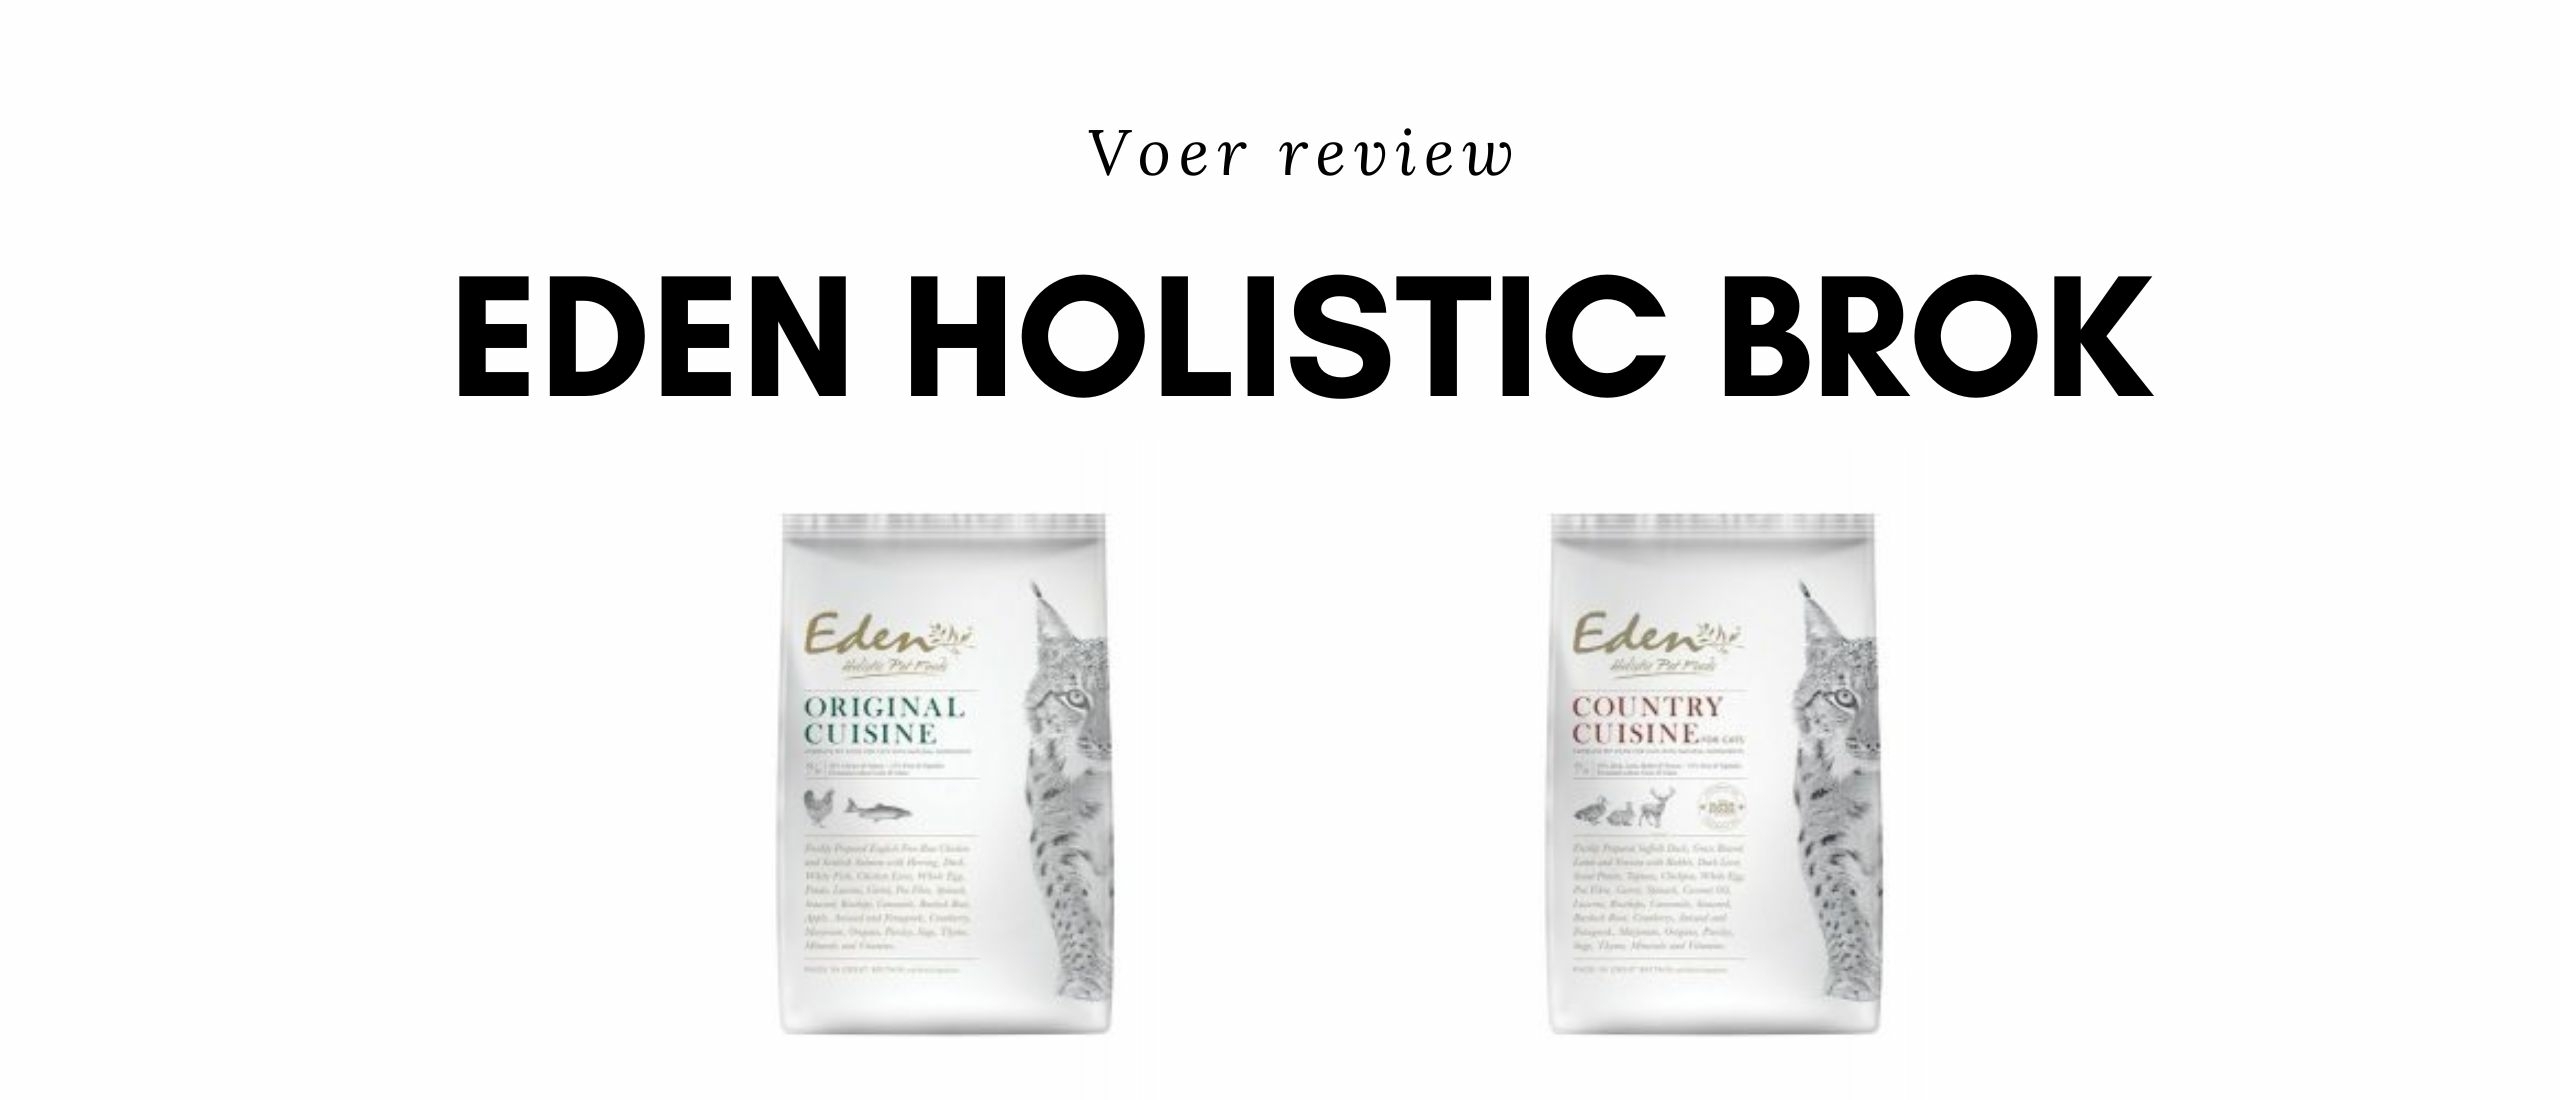 Voer review Eden Holistic Brok